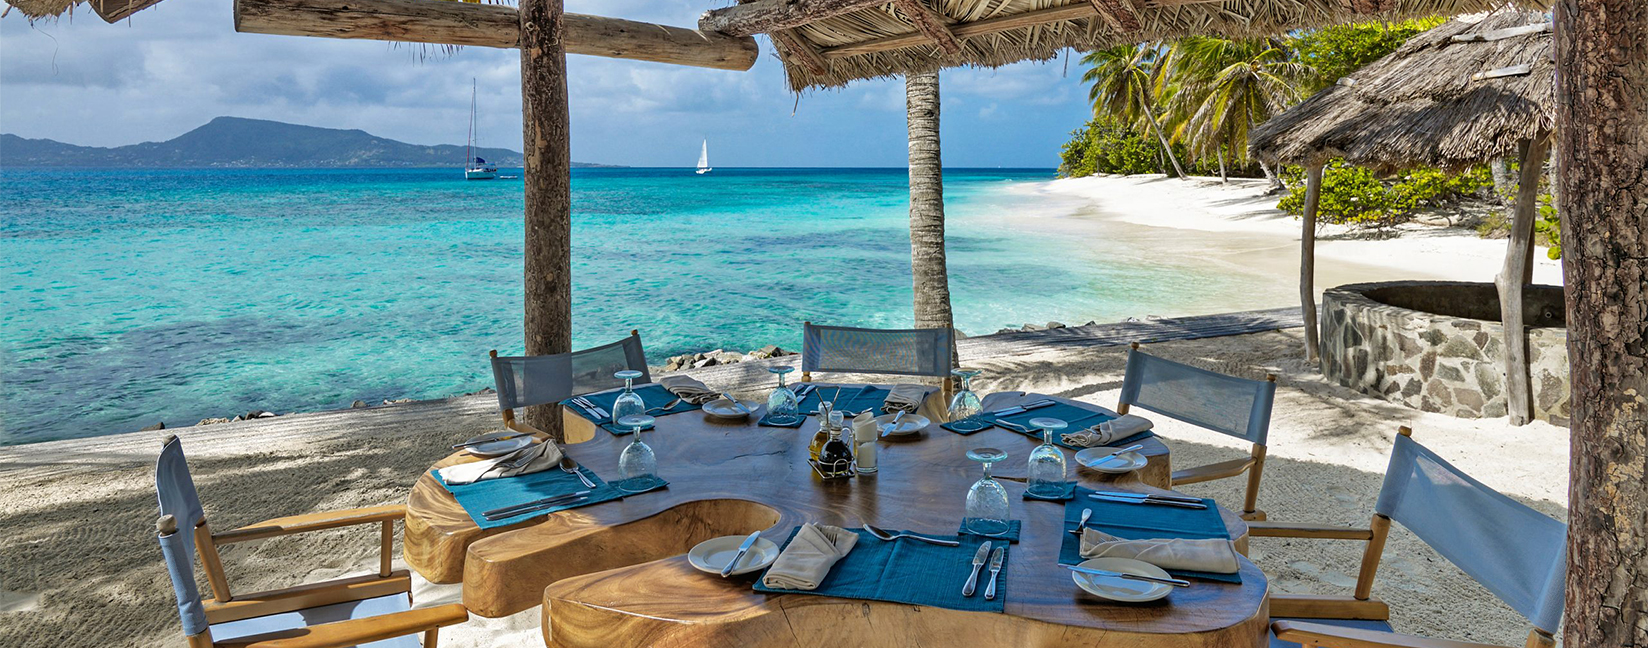 Resorts The Grenadines Deals